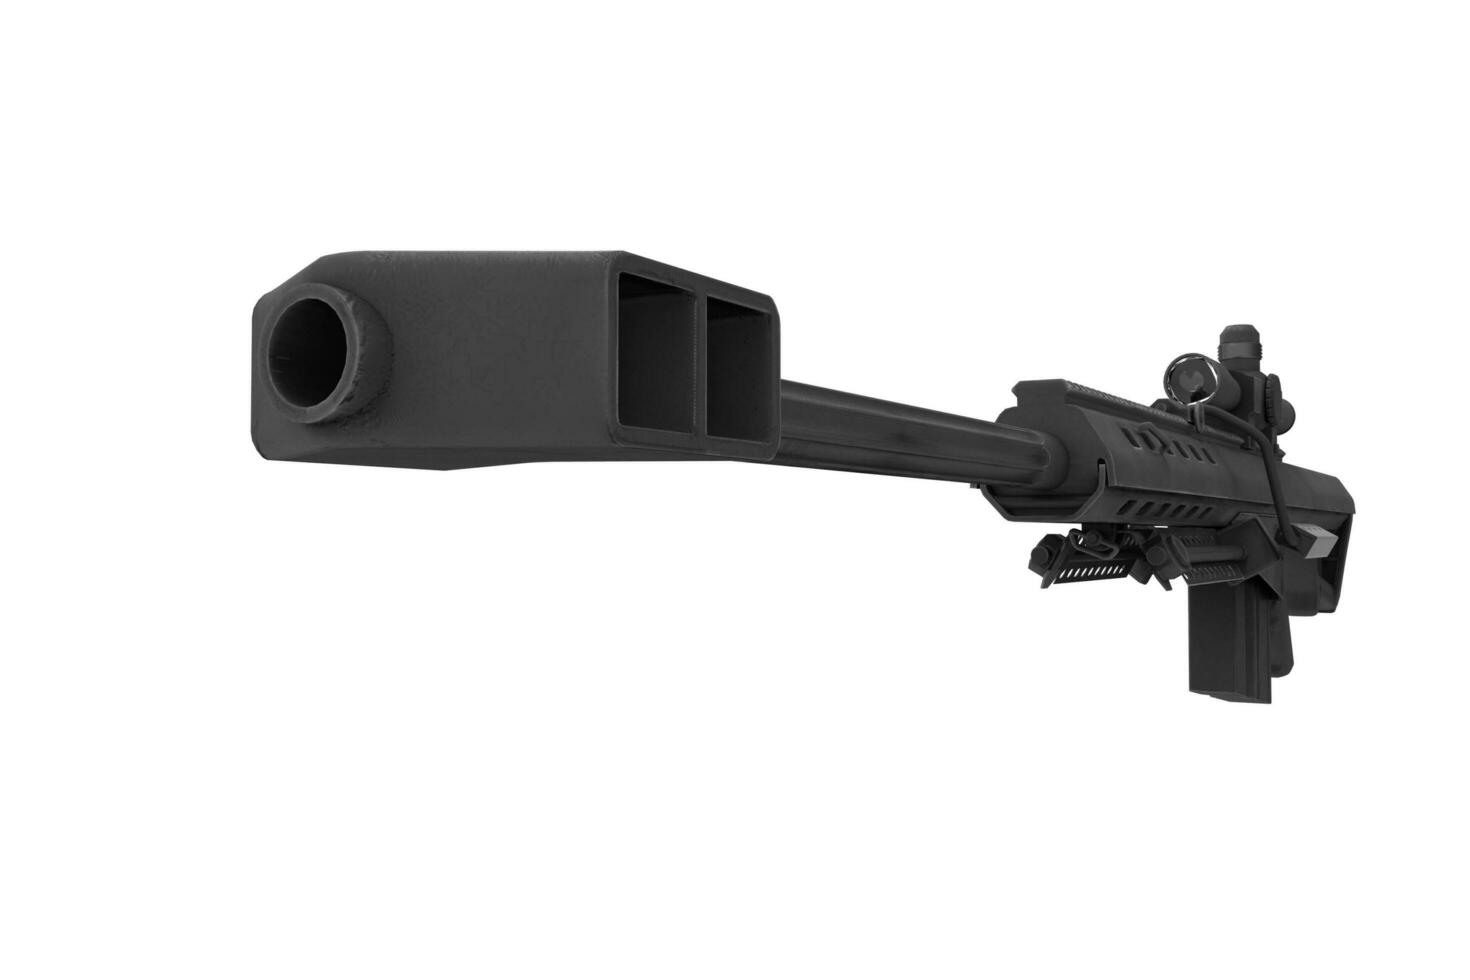 Sniper Rifle - Closeup photo